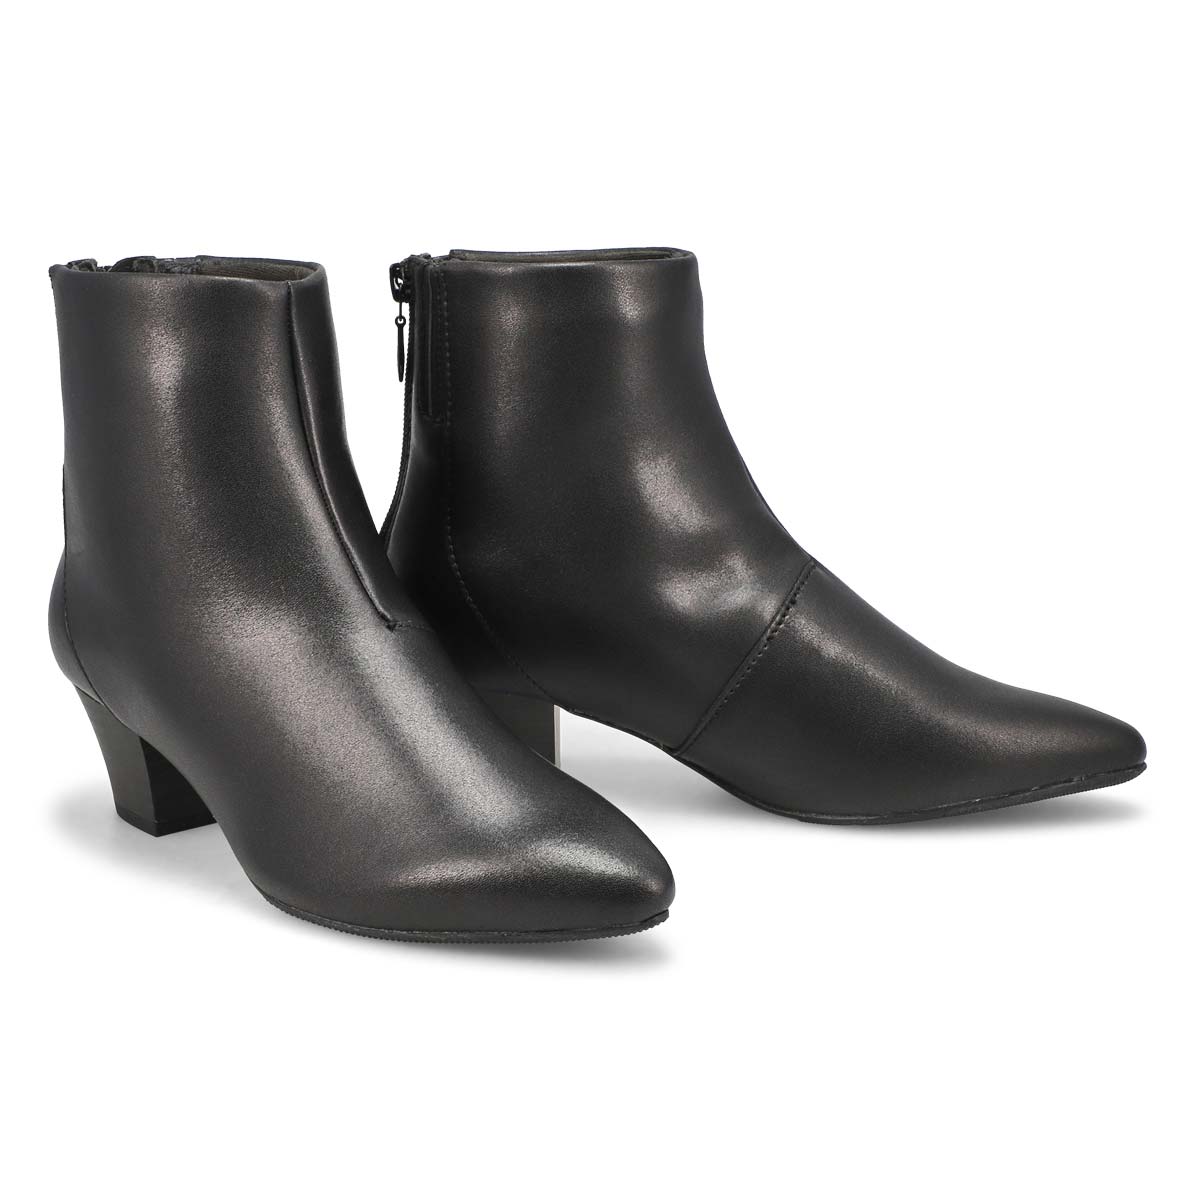 Women's Teresa Leather Ankle Boot - Black